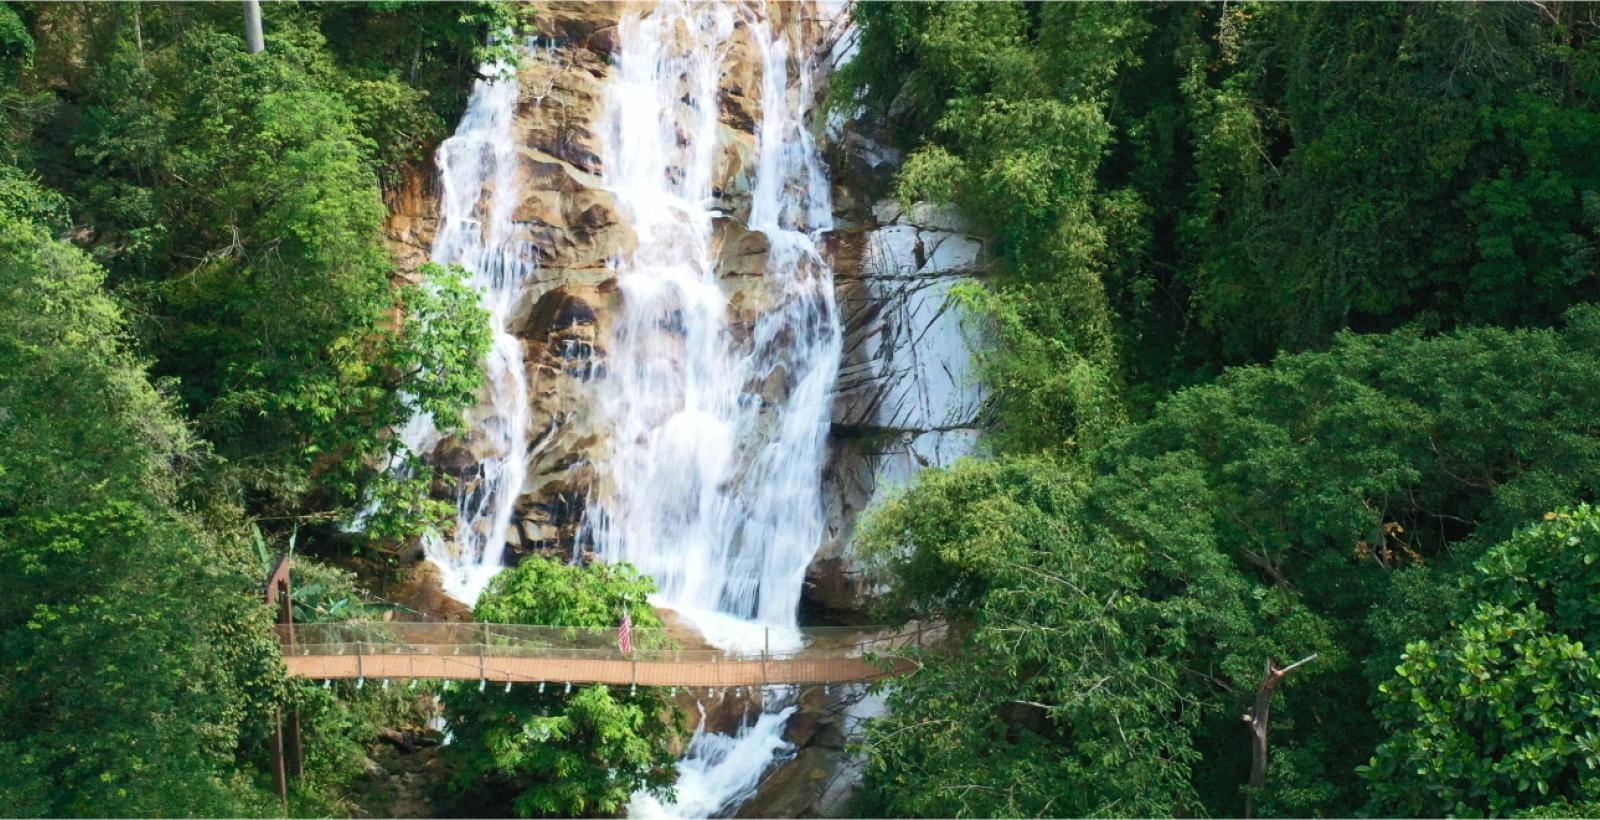 Taman Eko-Rimba Lata Kinjang waterfall